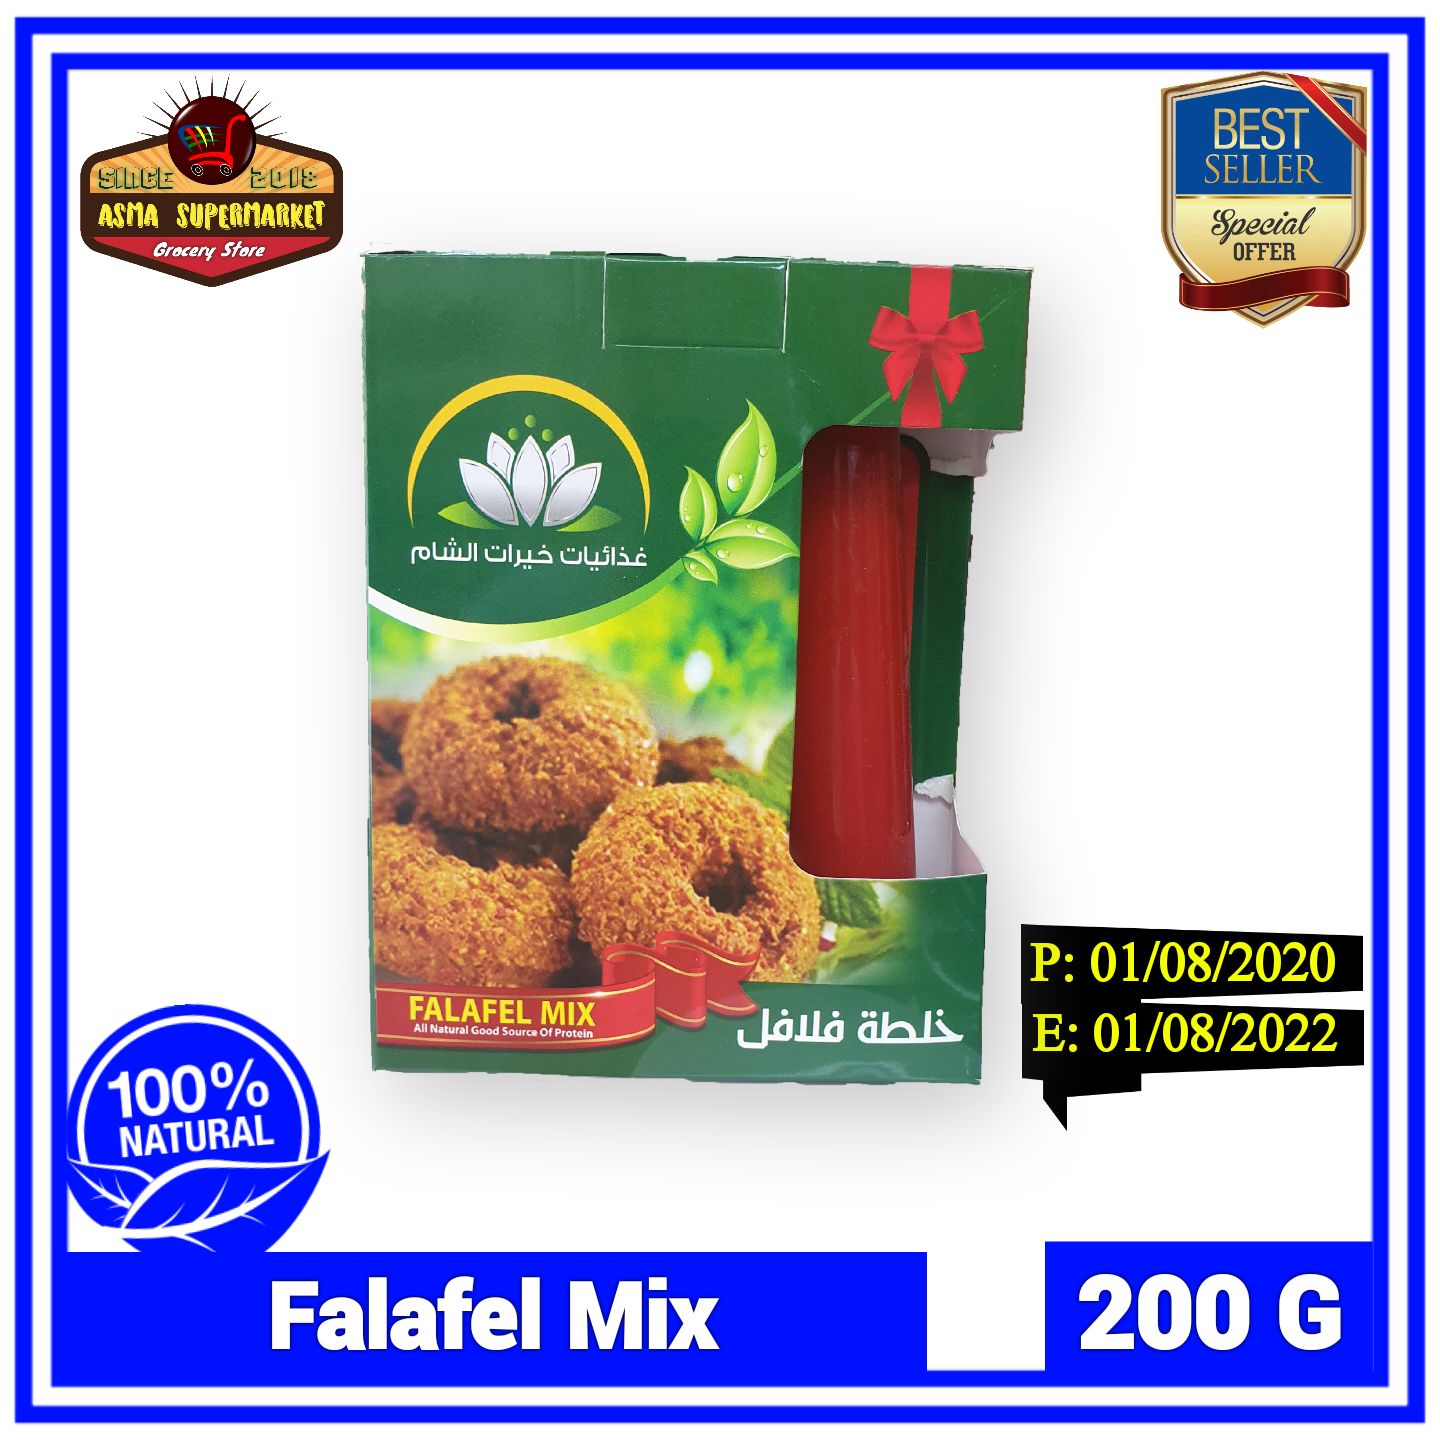 Falafel Mix Quick to prepare+(Falafel Mixer free) - 200G /&/ (خلطة فلافل +(قالب فلافل هدية